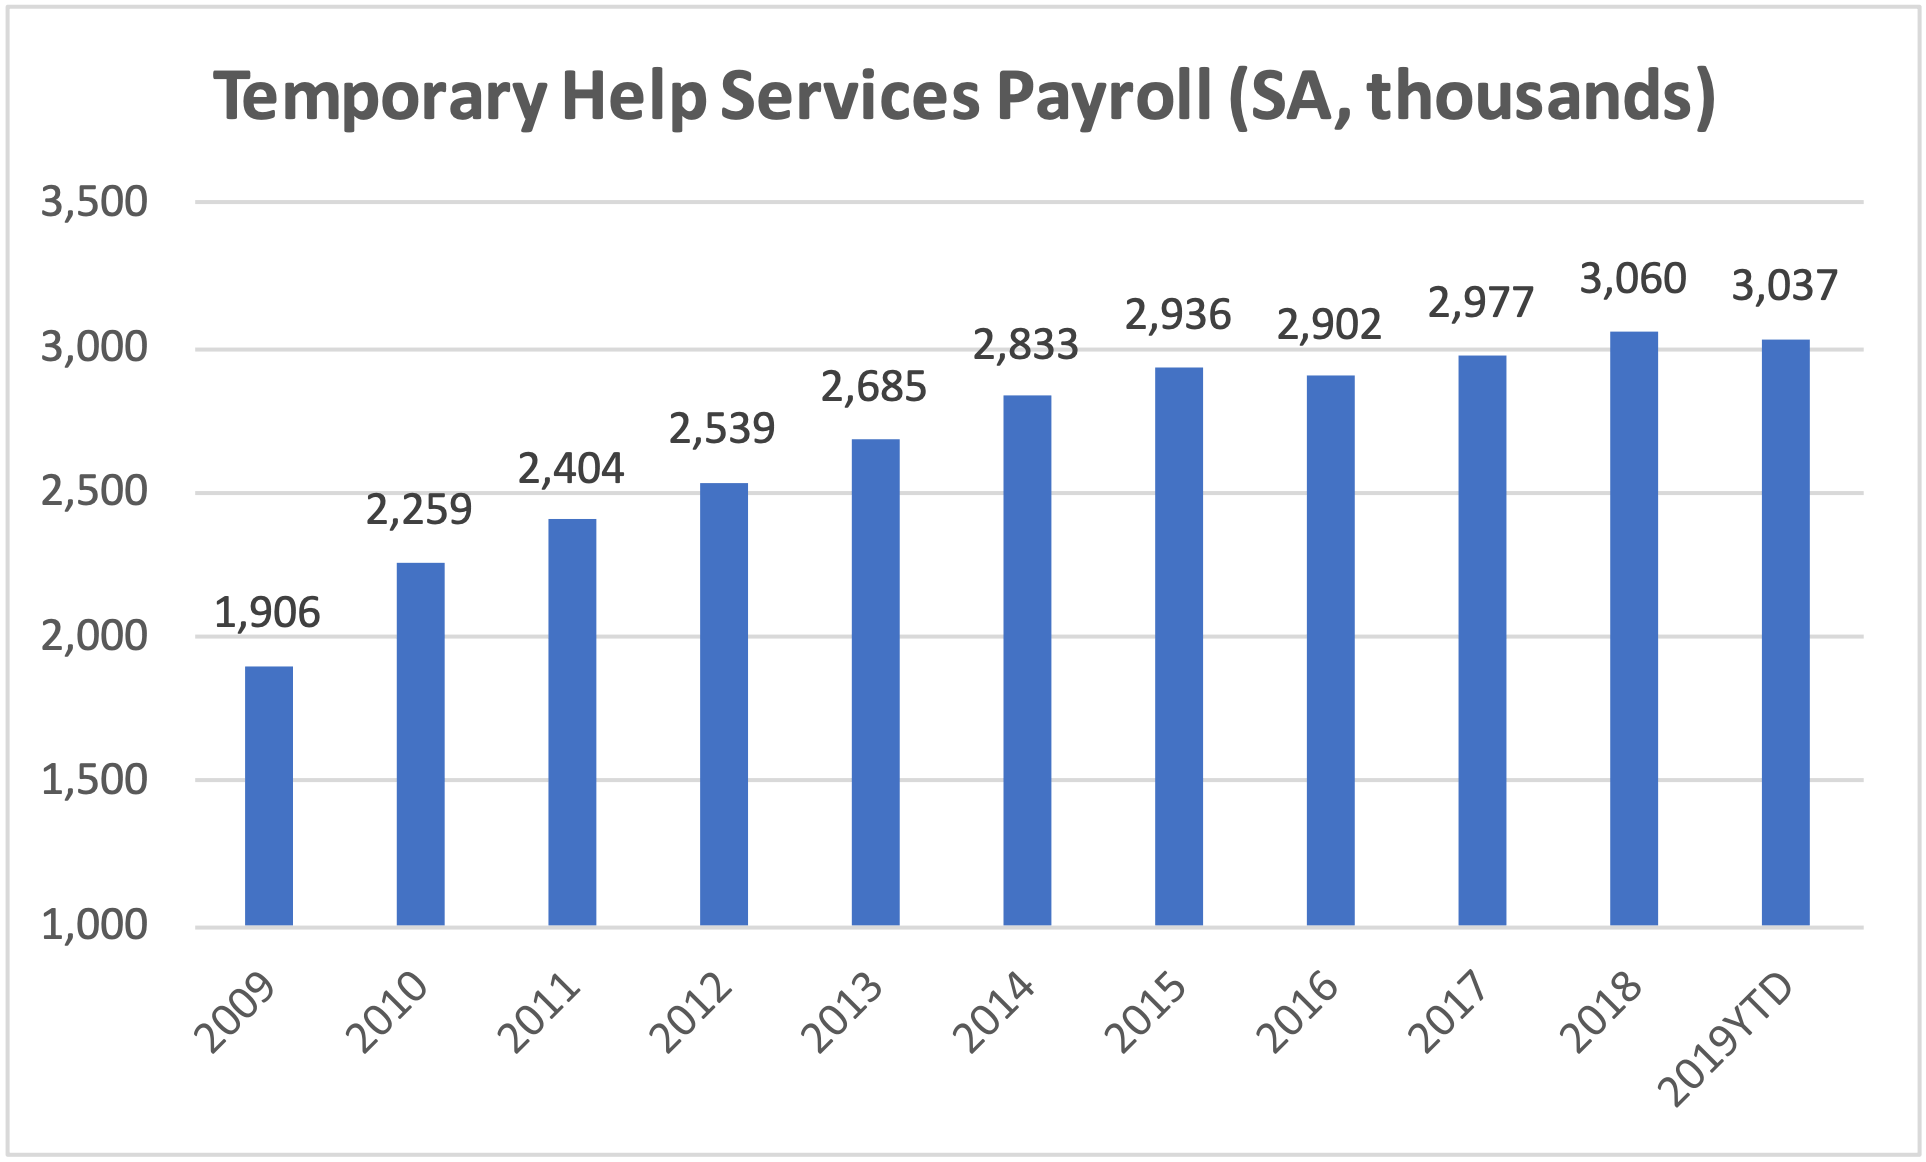 Temporary Help Services Payroll (SA, thousands)